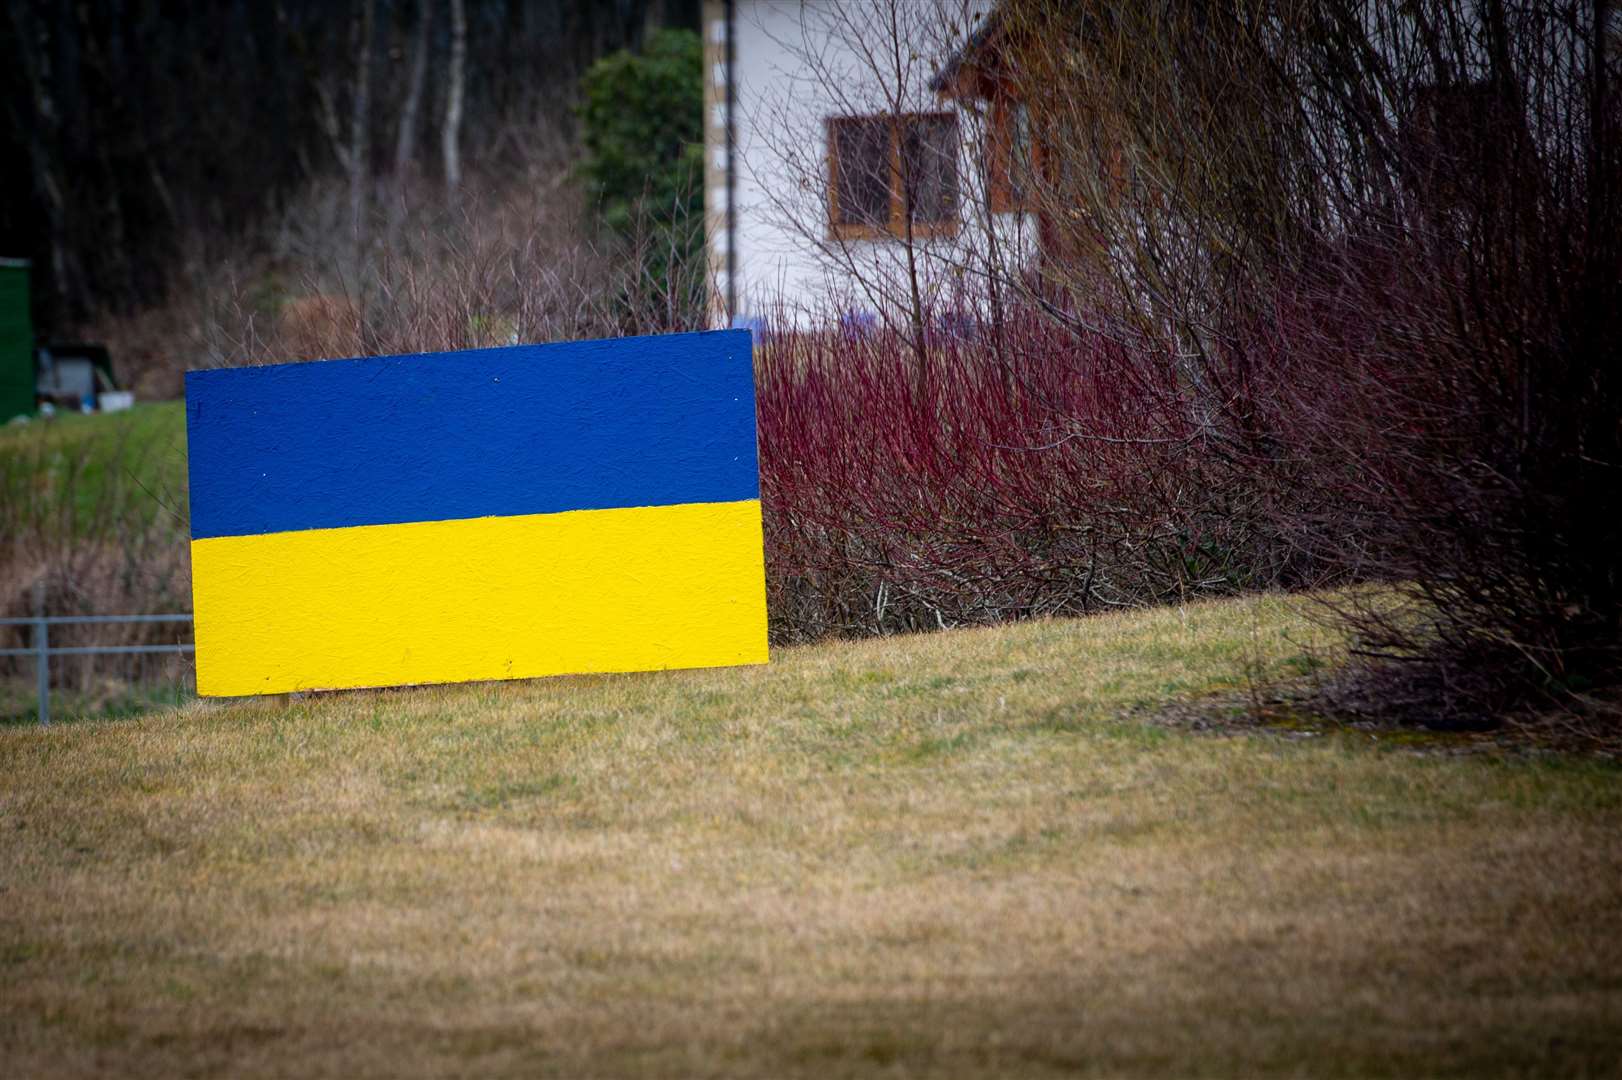 Ukrainian flag at Tore roundabout.